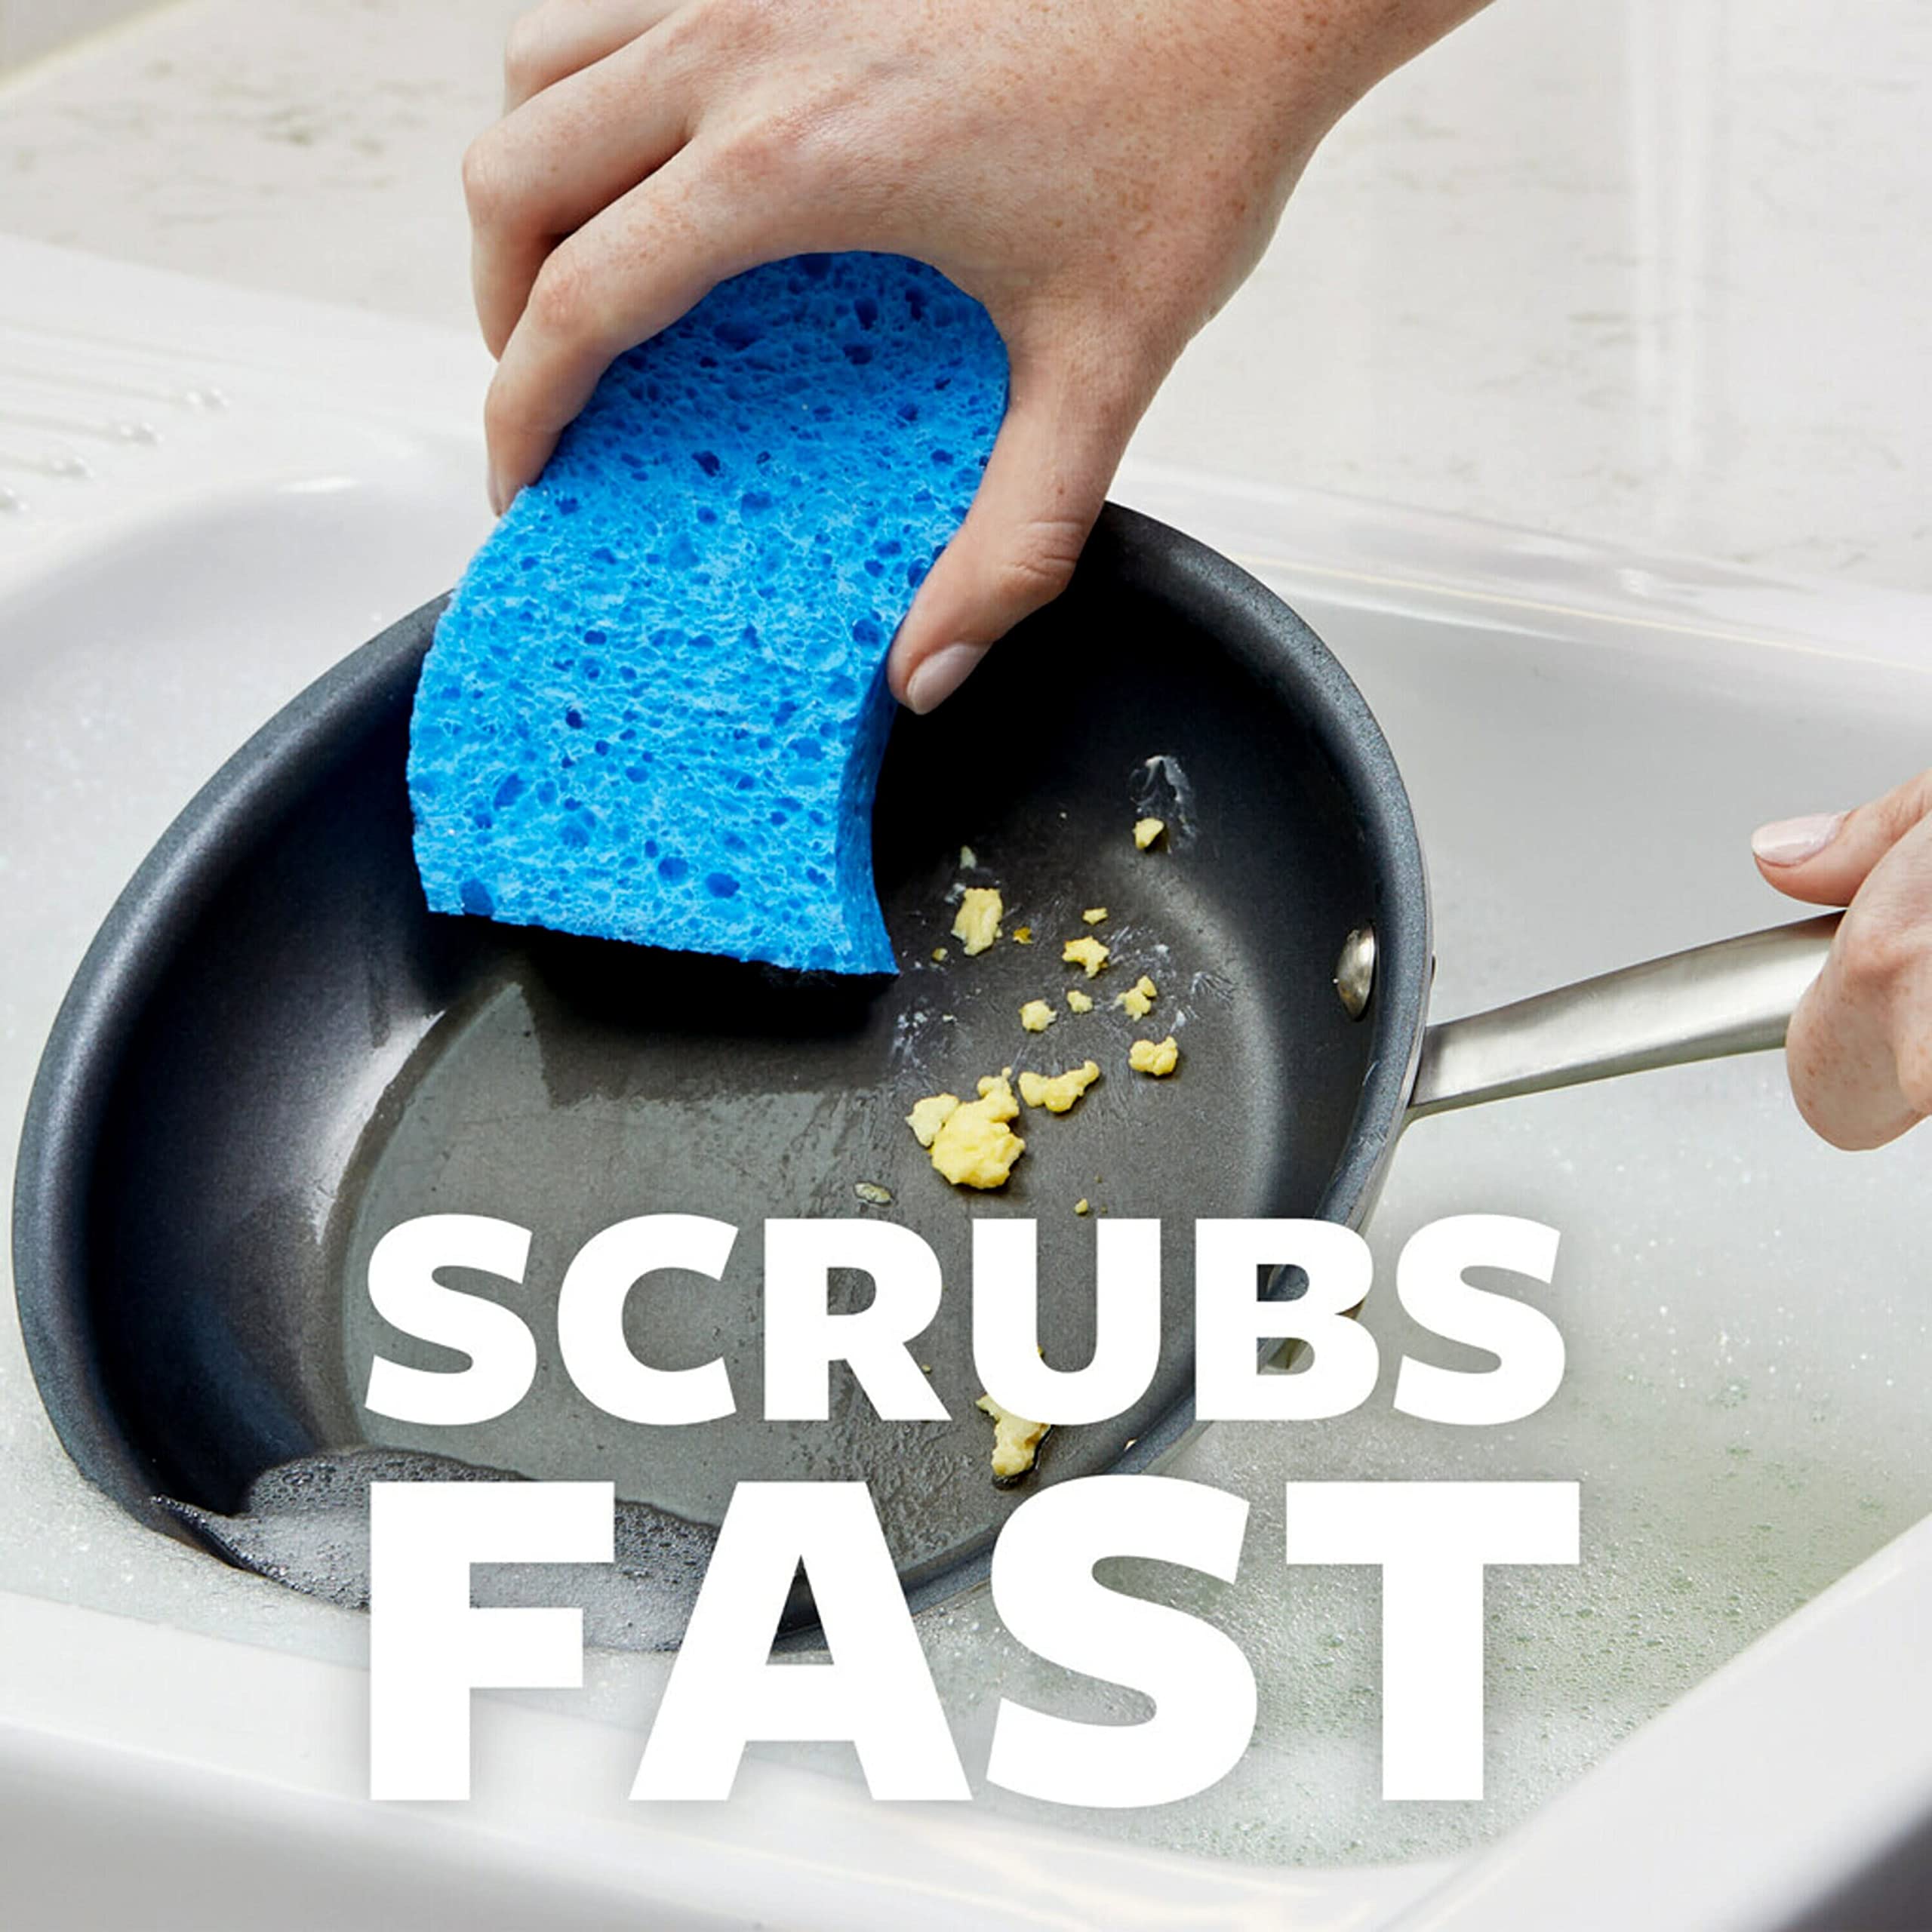 Scotch-Brite Scrub Dots Non-Scratch Scrub Sponges, Sponges for Cleaning Kitchen, Bathroom, and Household, Non-Scratch Sponges Safe for Non-Stick Cookware, 6 Scrubbing Sponges